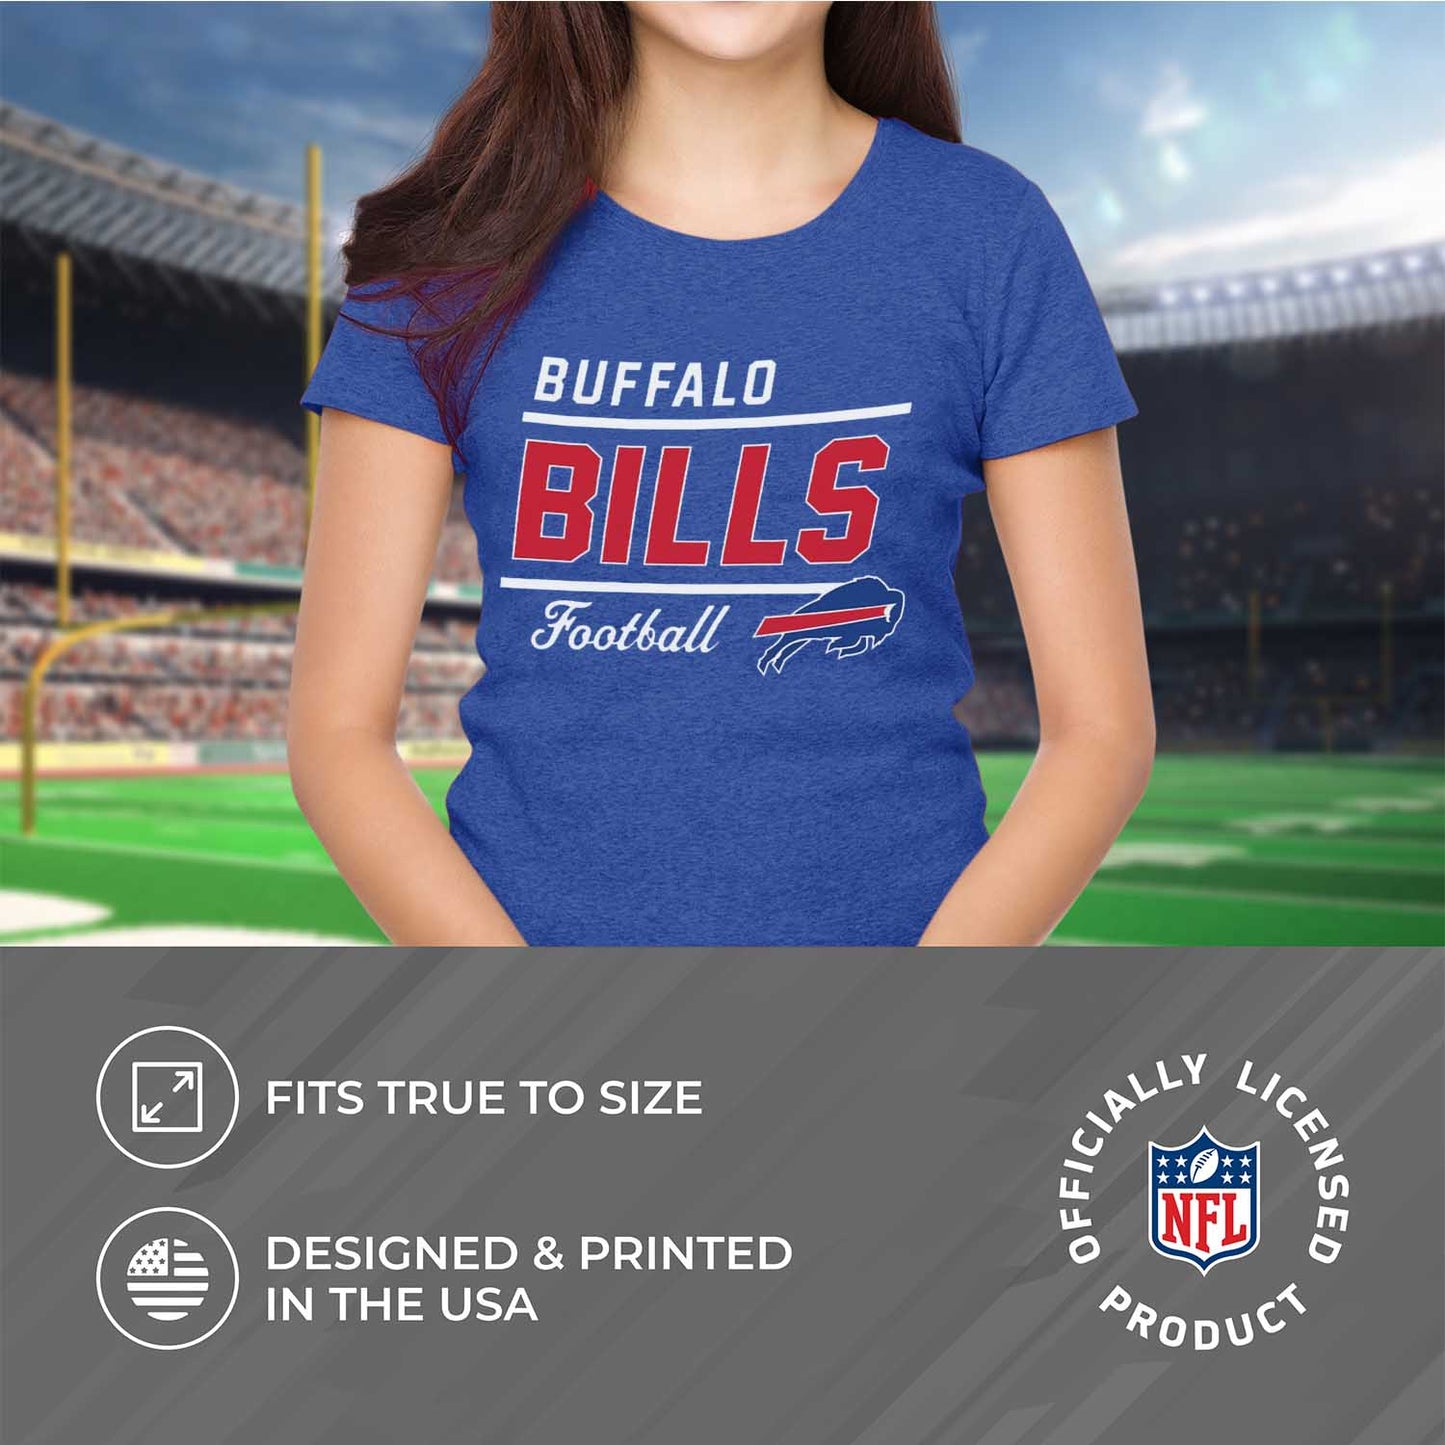 Buffalo Bills NFL Gameday Women's Relaxed Fit T-shirt - Royal